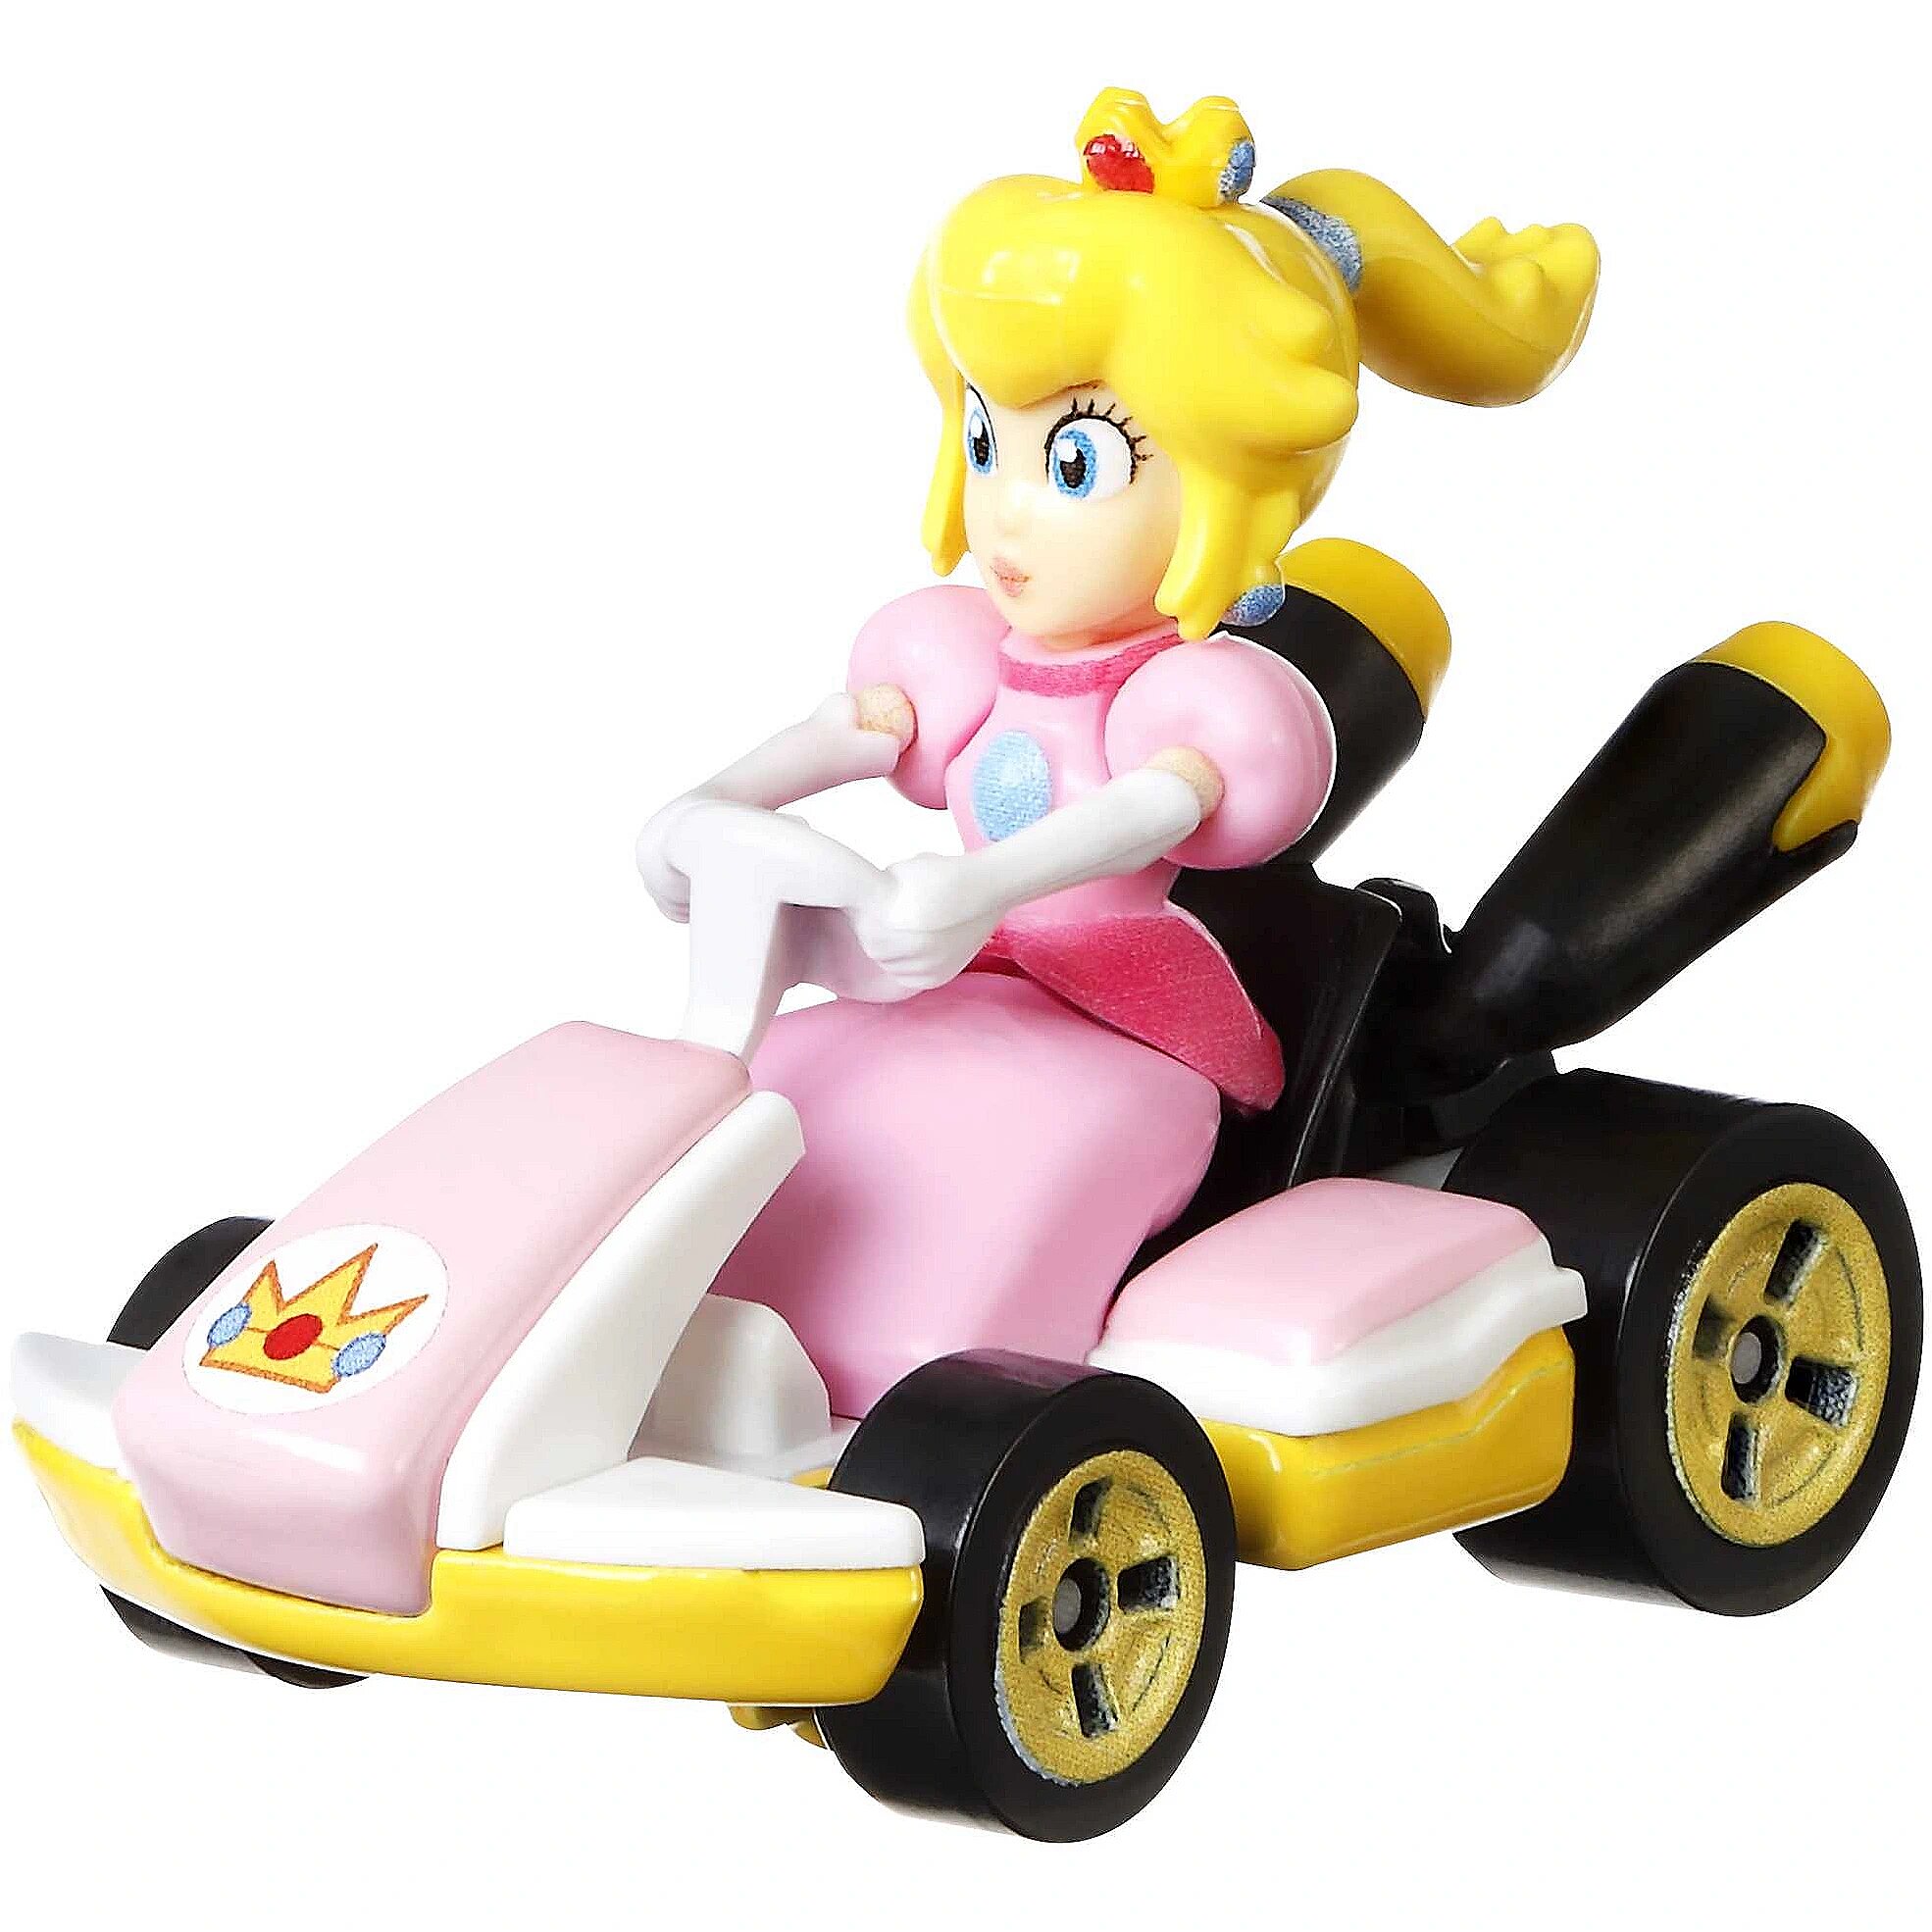 Hot Wheels 1:64 Die-Cast Mario Kart Vehicle Assortment - GBG25